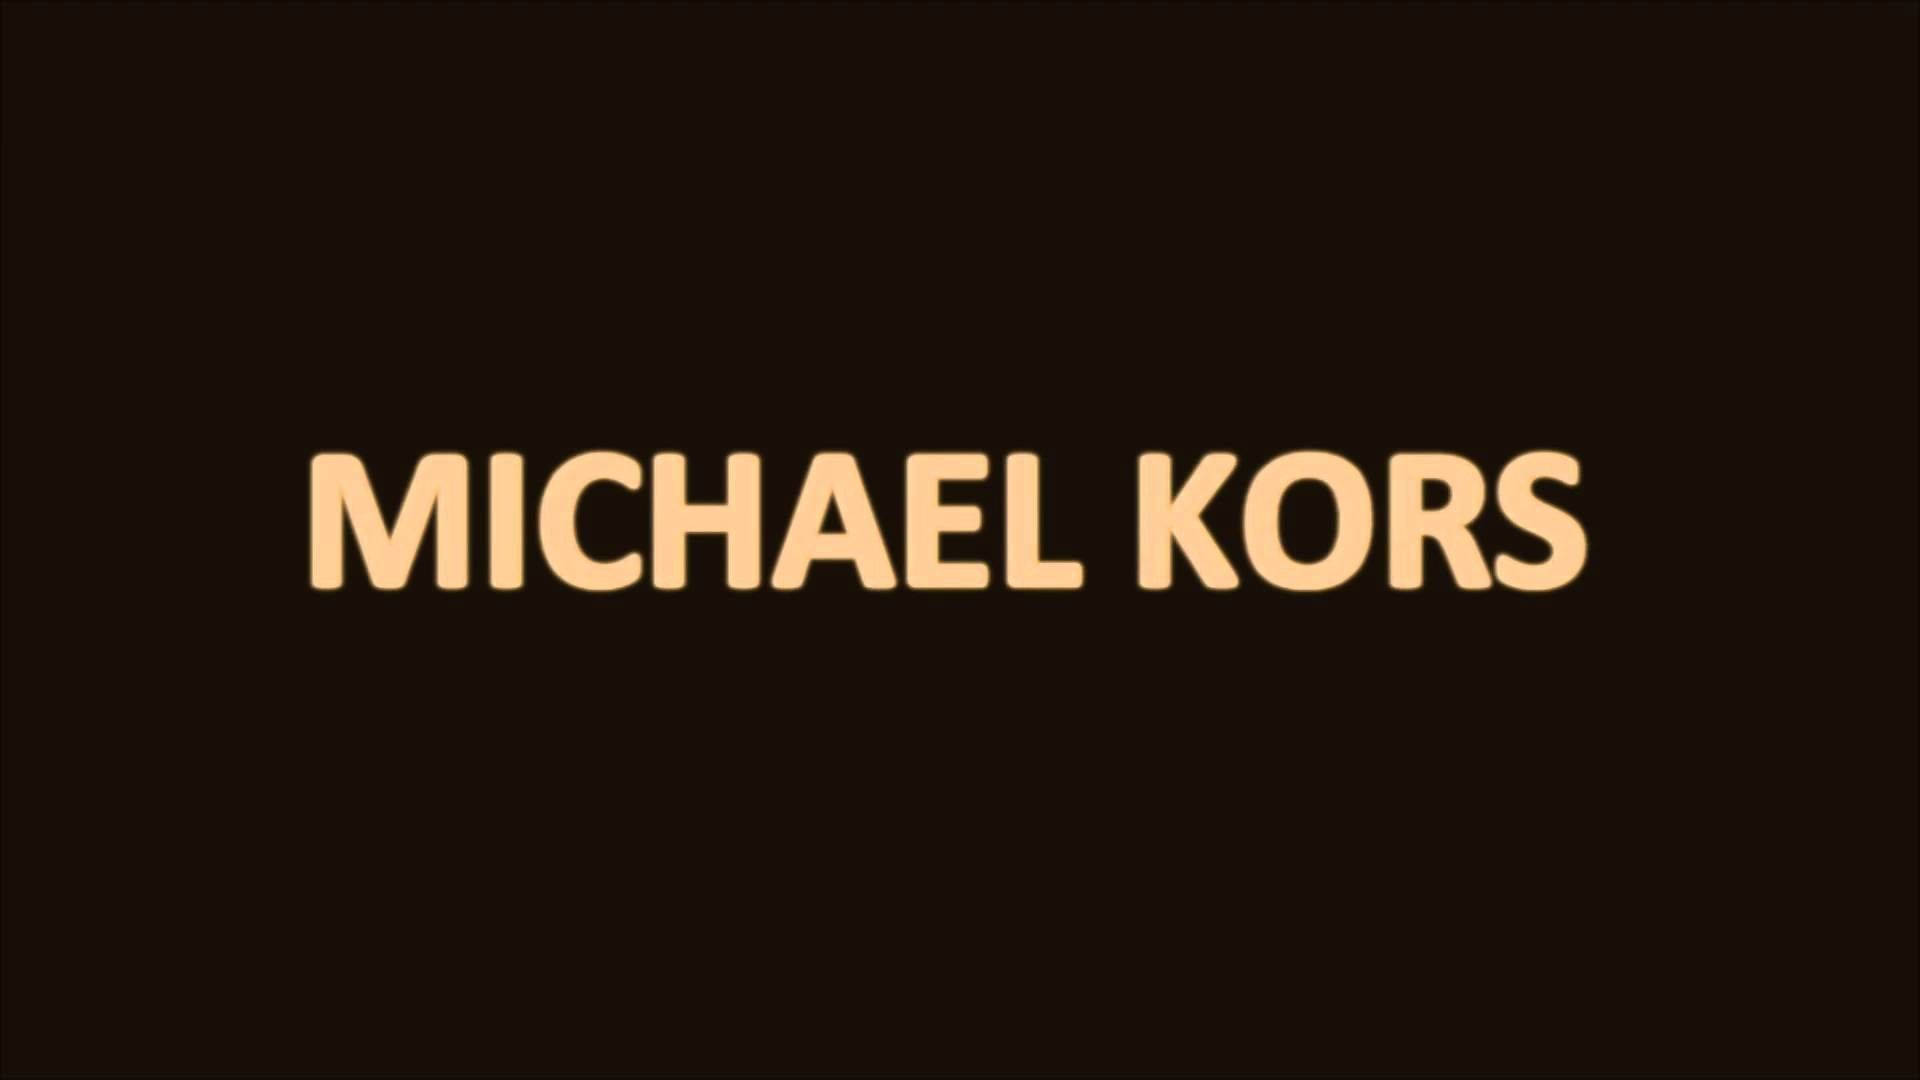 Michael Kors Wallpaper